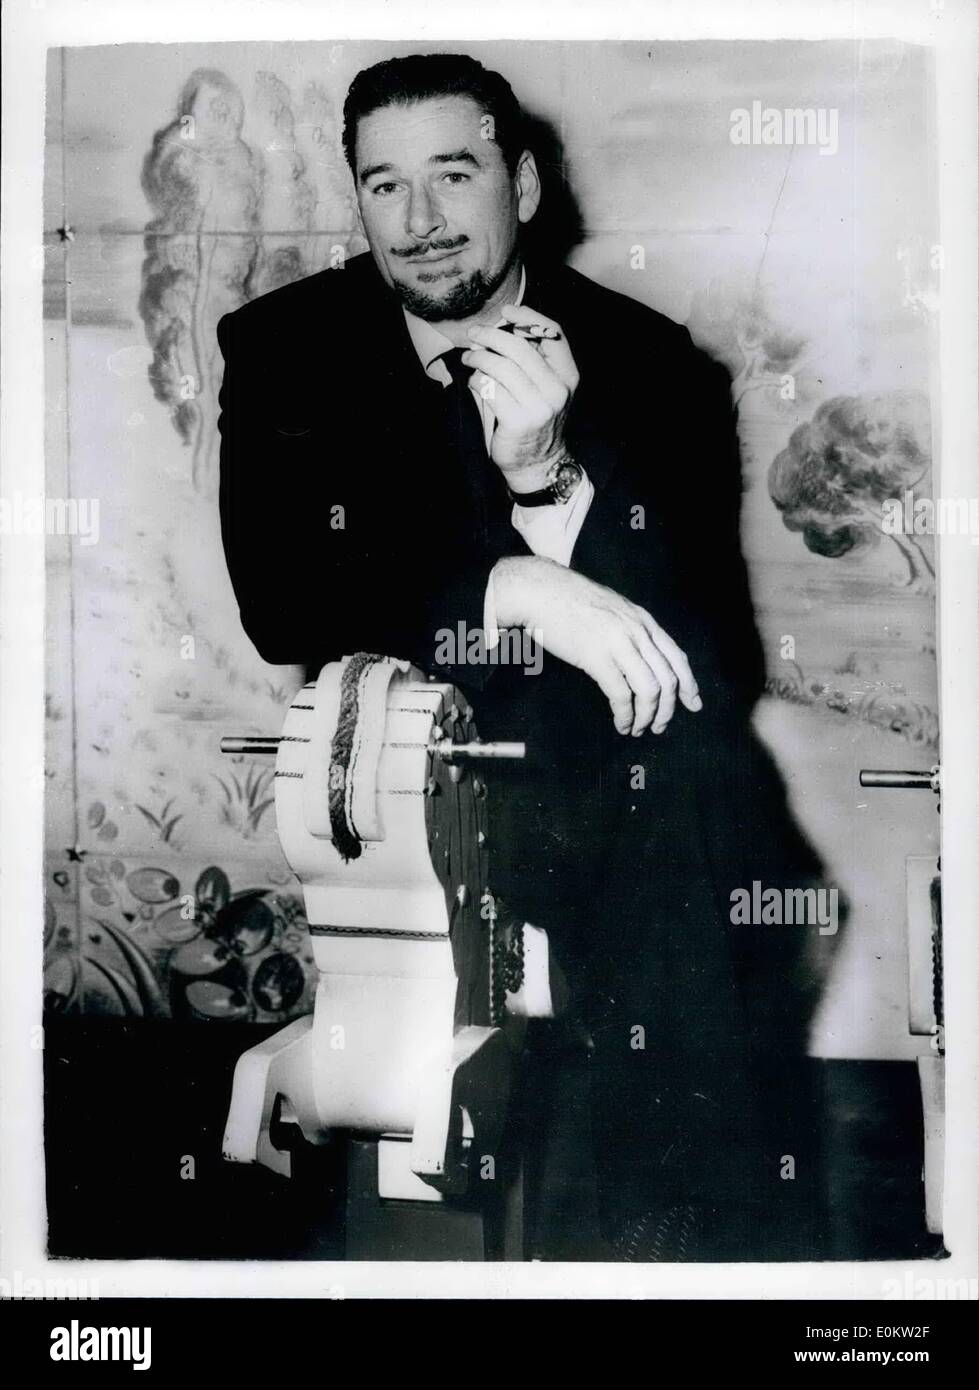 Febbraio 02, 1950 - Errol Flynn sport una barba... foto mostra:- star del cinema Errol Flynn, sport la barba e baffi quando h Foto Stock